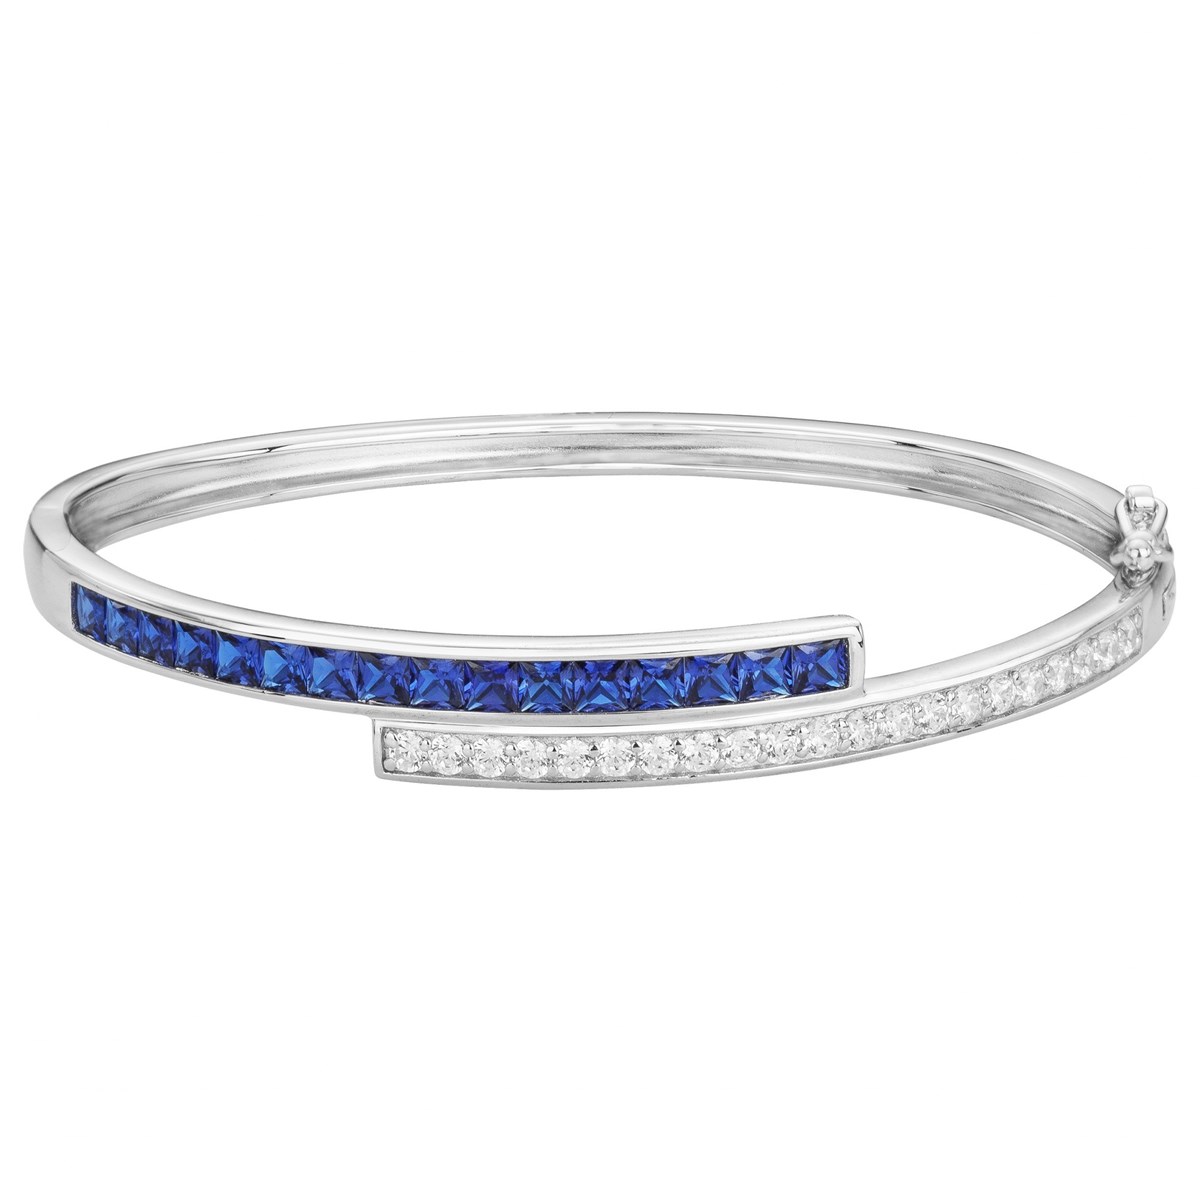 Bracelet semi-rigide en Argent avec spinelle bleu saphir